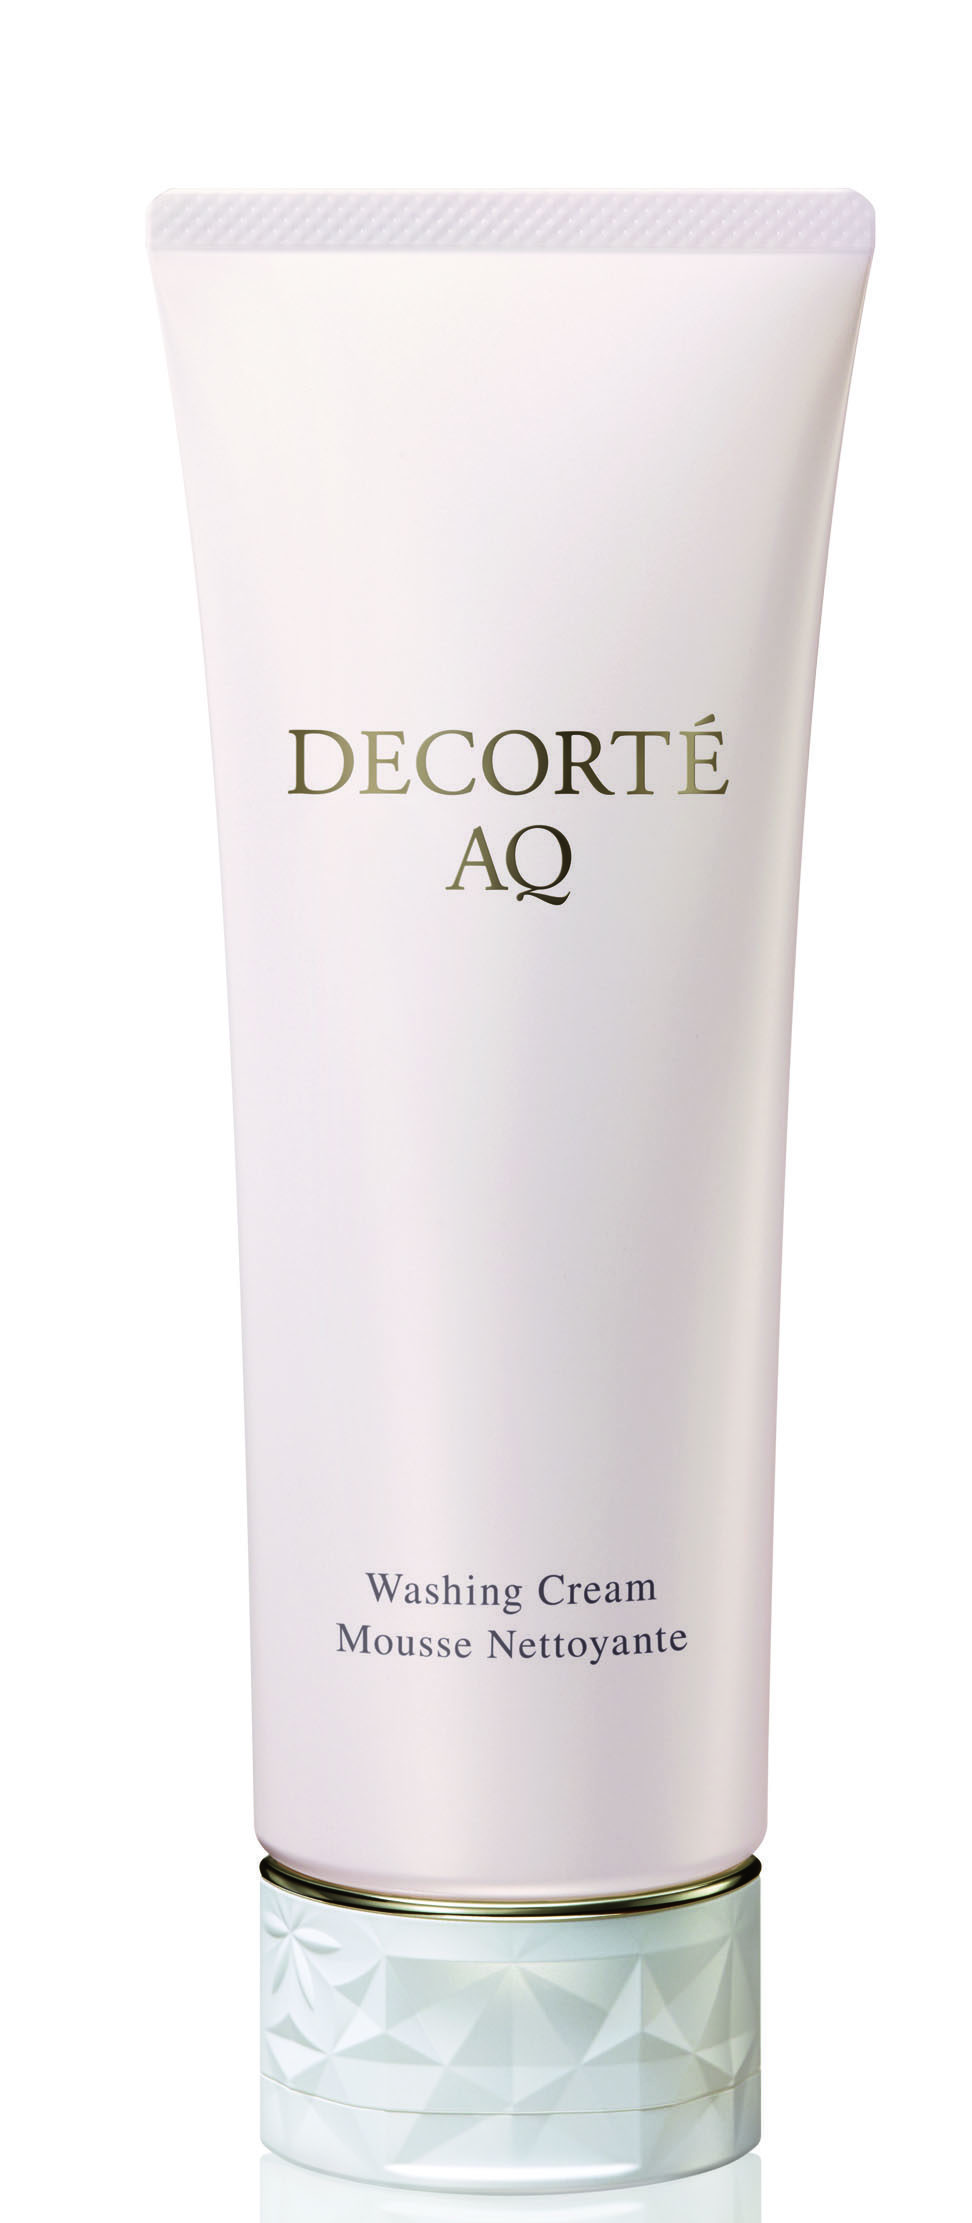 DECORTÉ AQ Washing Cream